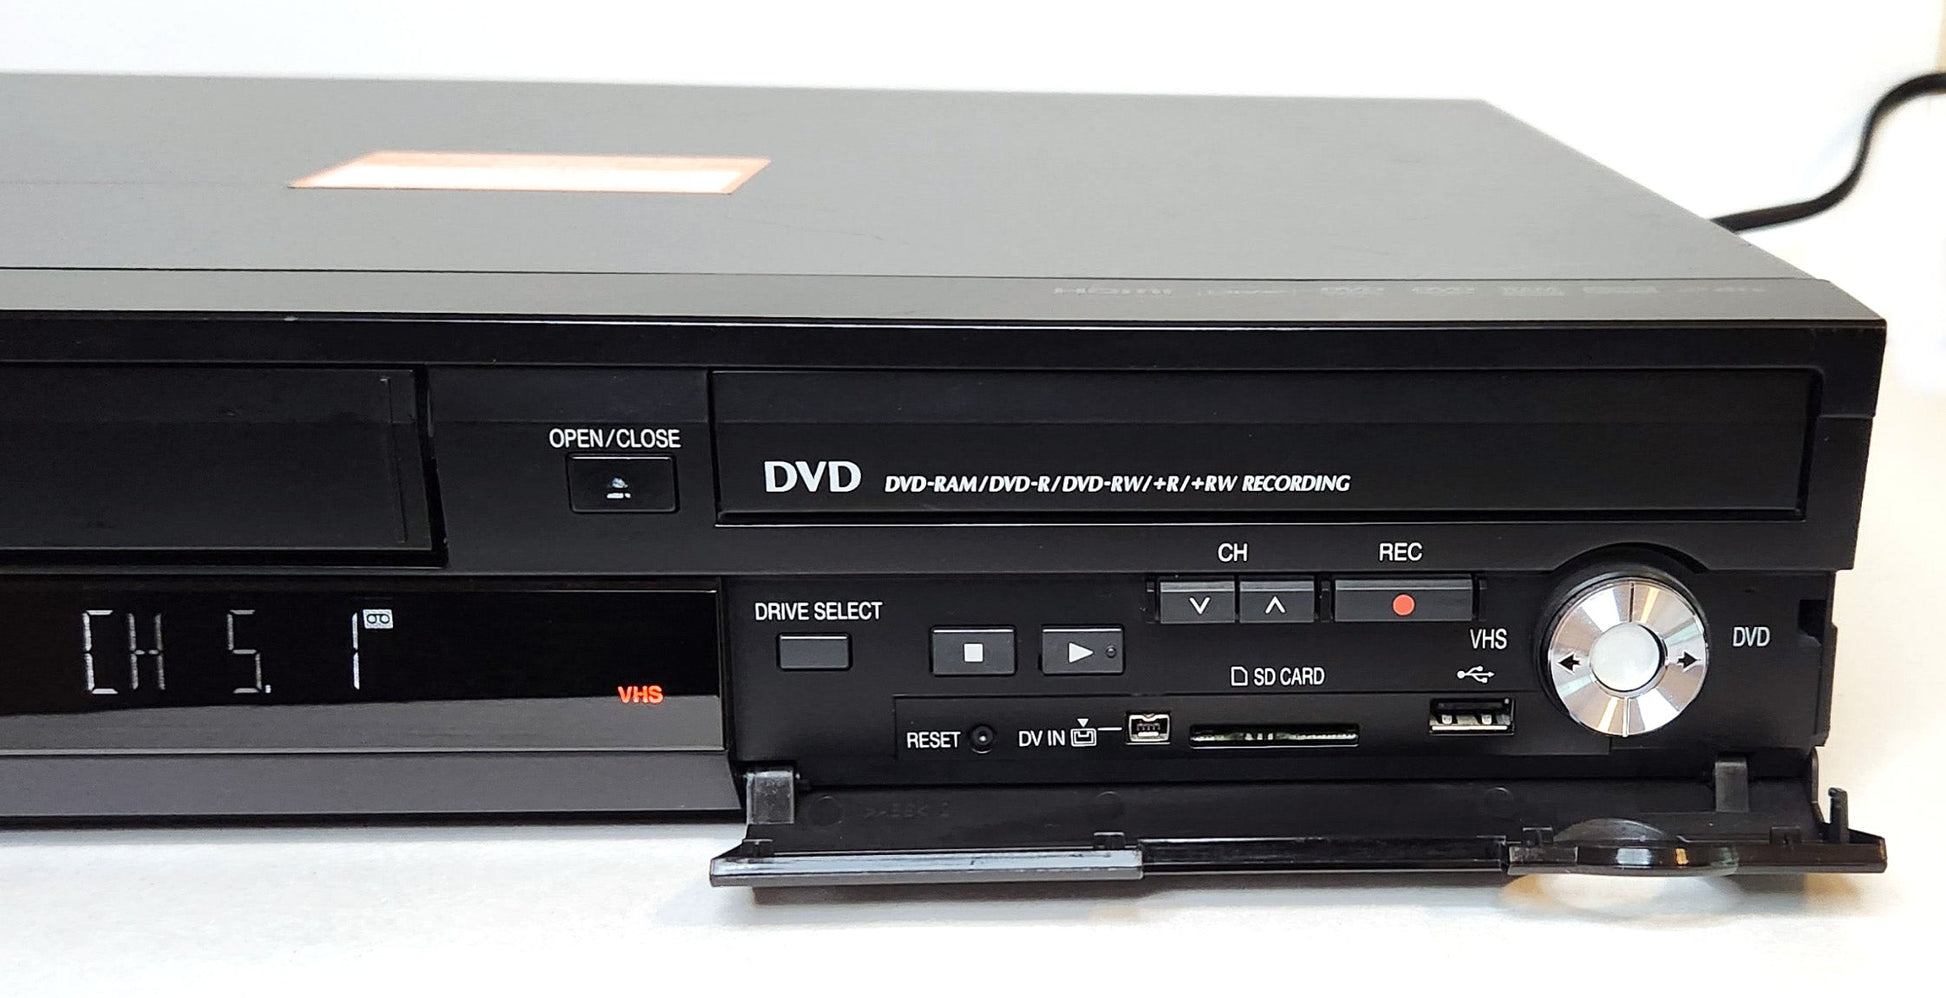 Panasonic DMR-EZ48V VCR/DVD Recorder Combo with HDMI, Digital Tuner - Right